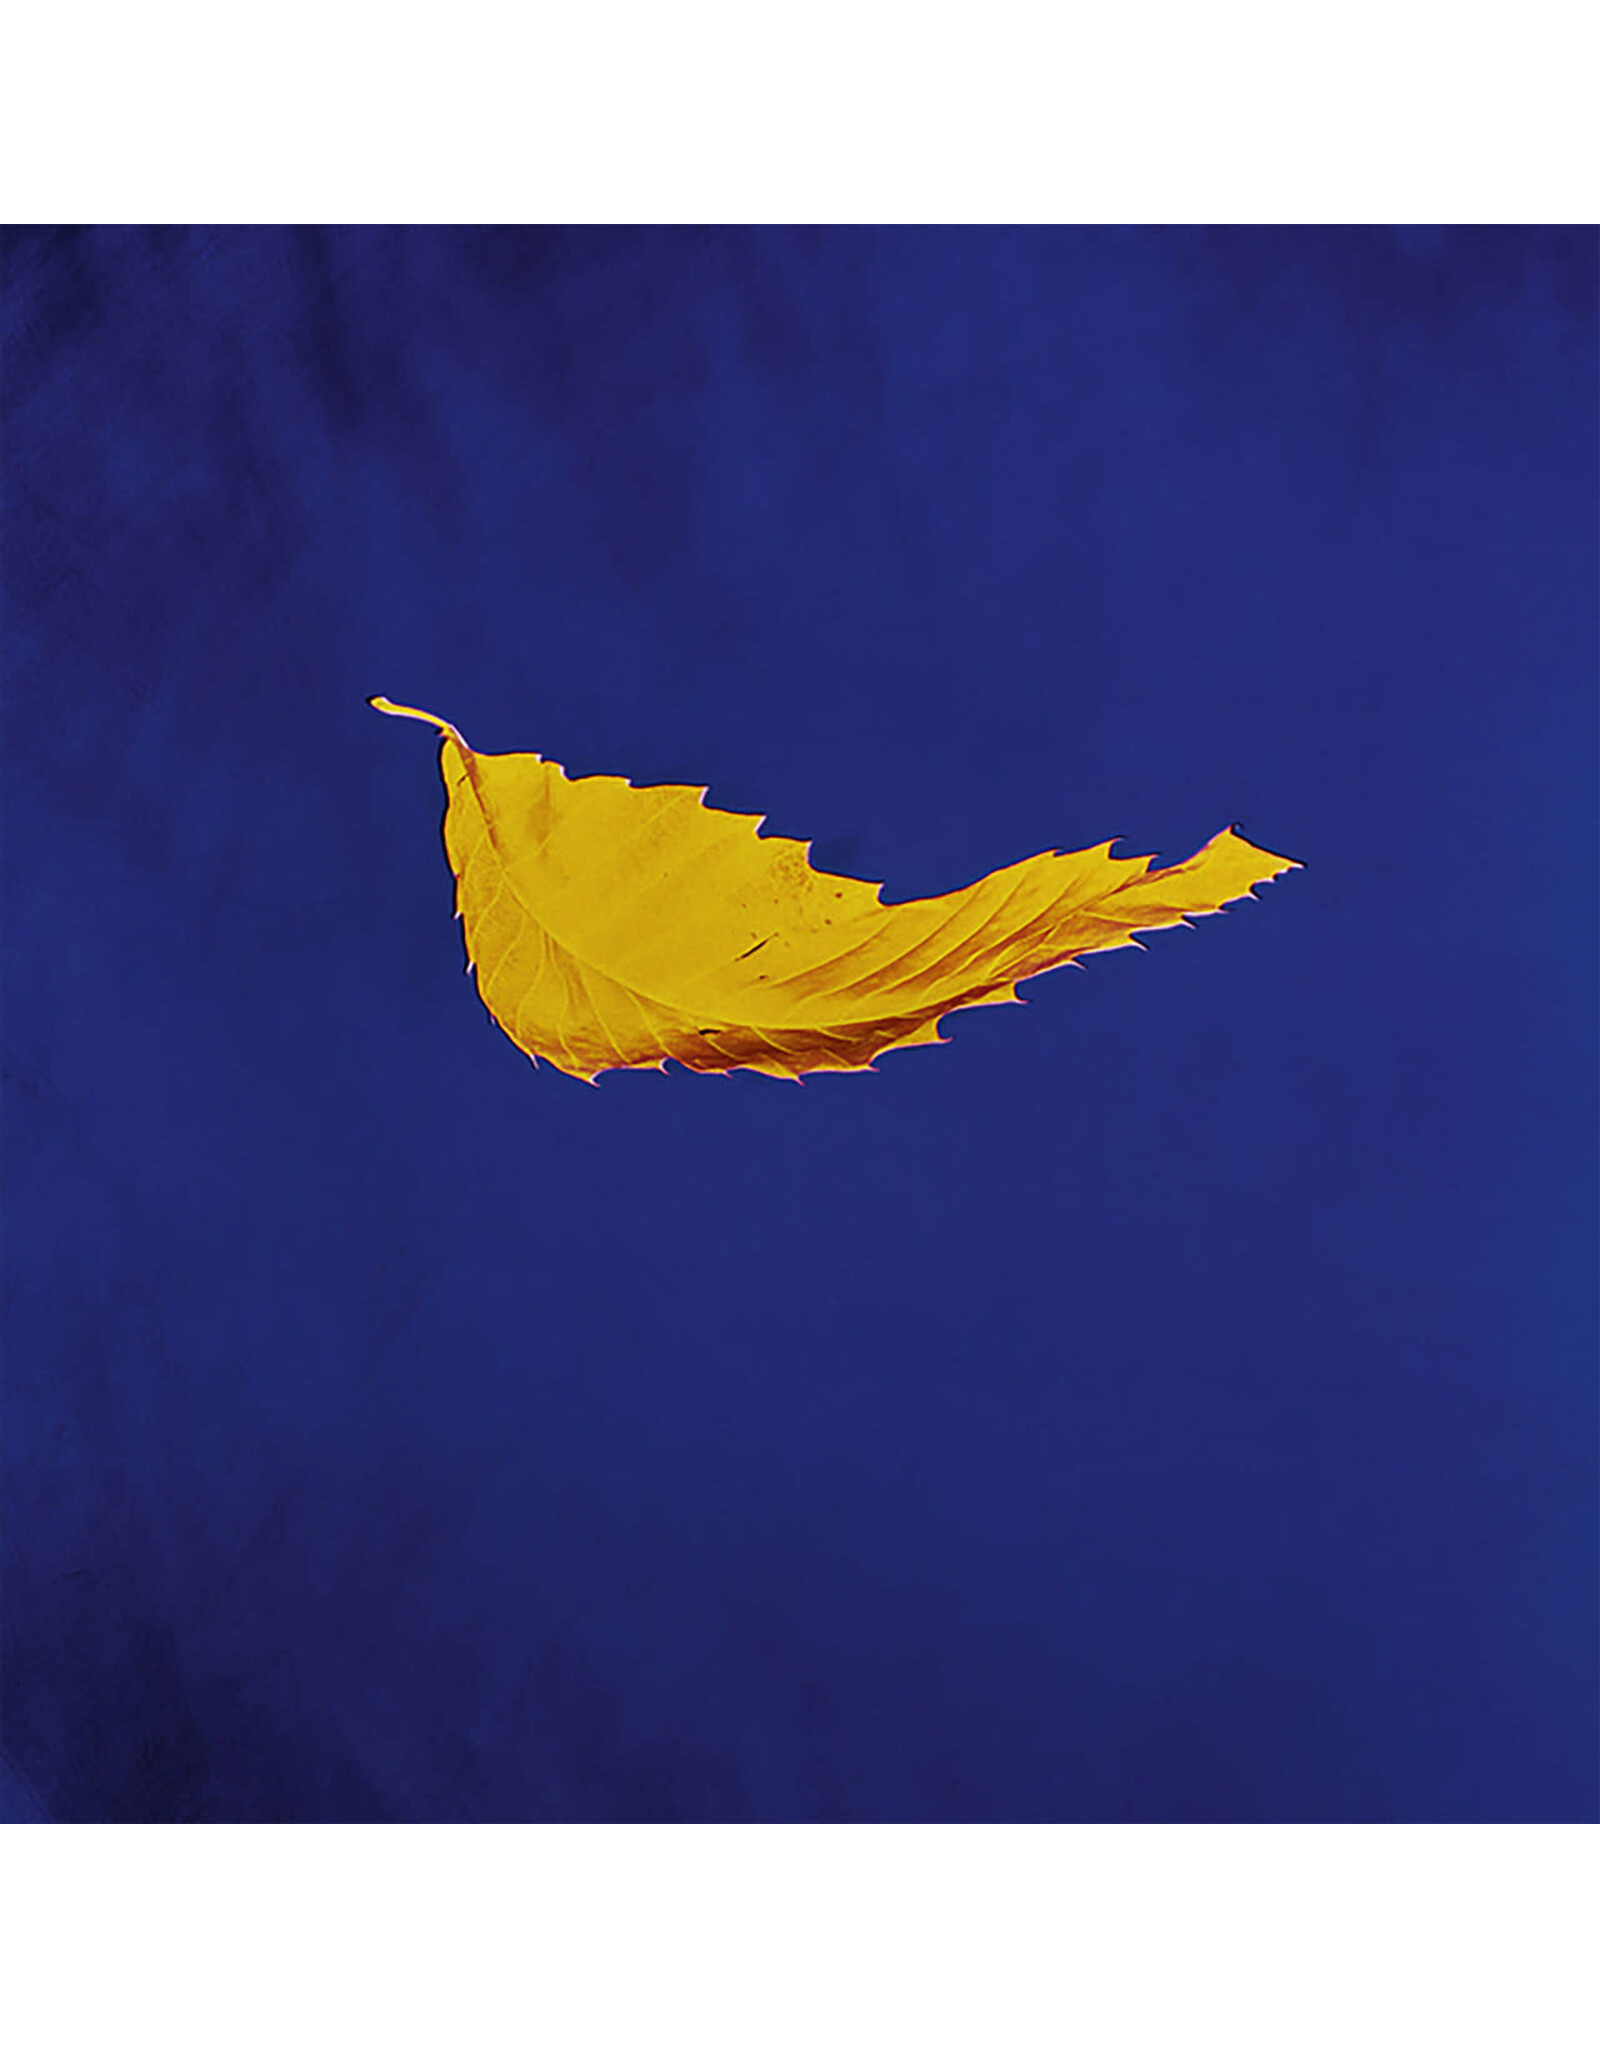 New Order - True Faith (12" Single) [2023 Remaster]